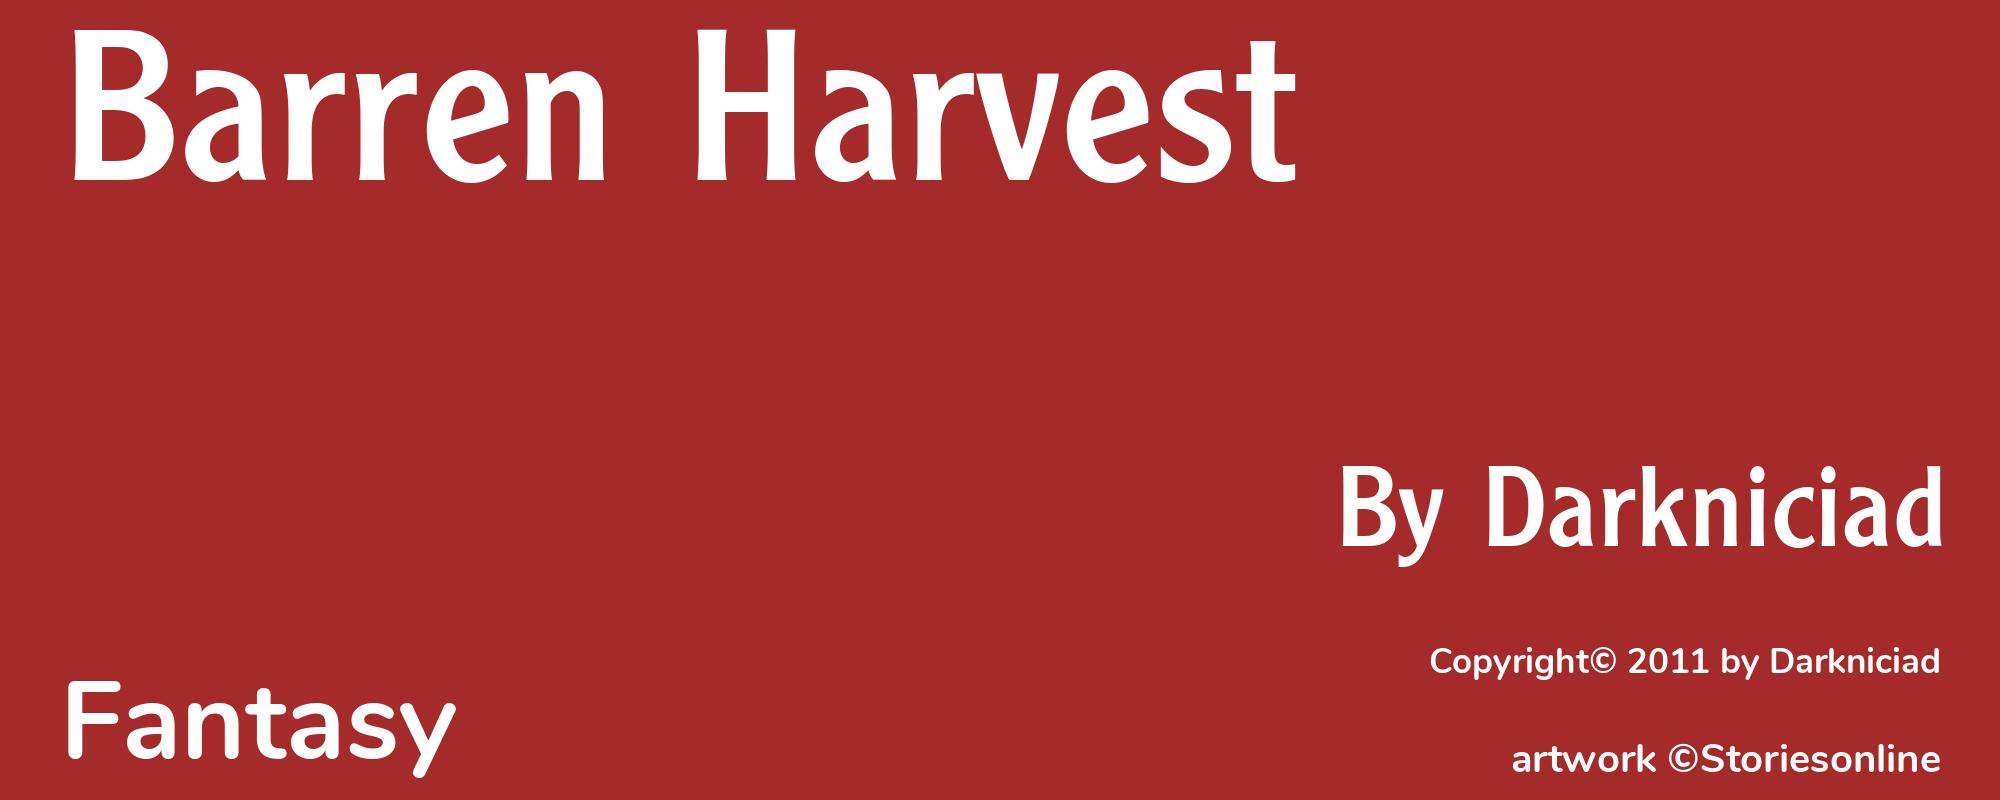 Barren Harvest - Cover